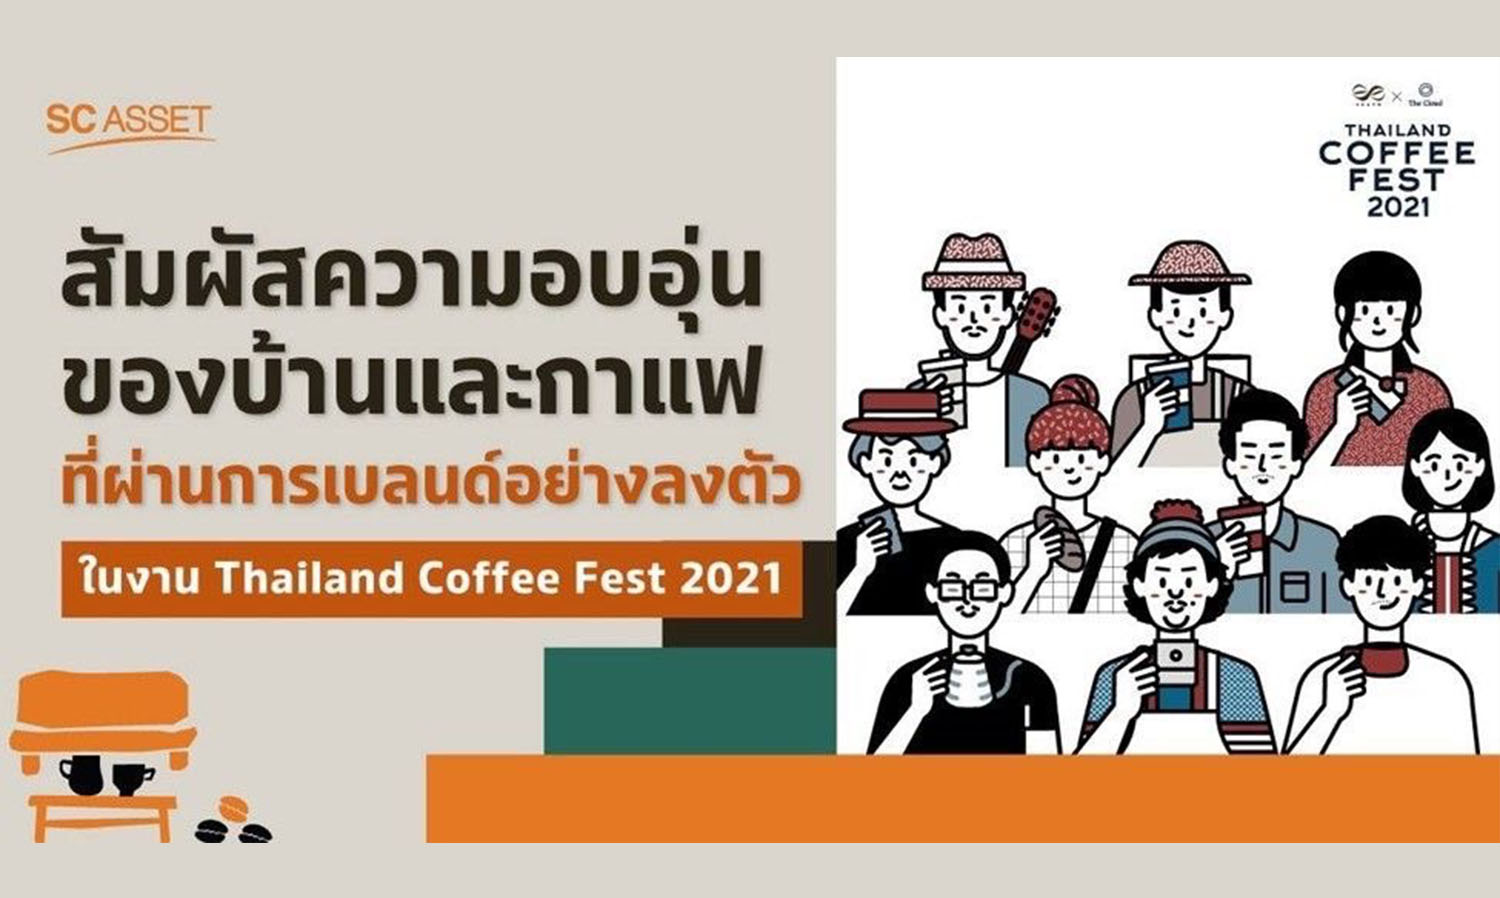 SC x The Cloud สร้างบ้านสำหรับคนรักกาแฟ Coffee House by SC Asset ในงาน Thailand Coffee Fest 2021 ที่เมืองทองธานี 23-26 ธ.ค.นี้ 